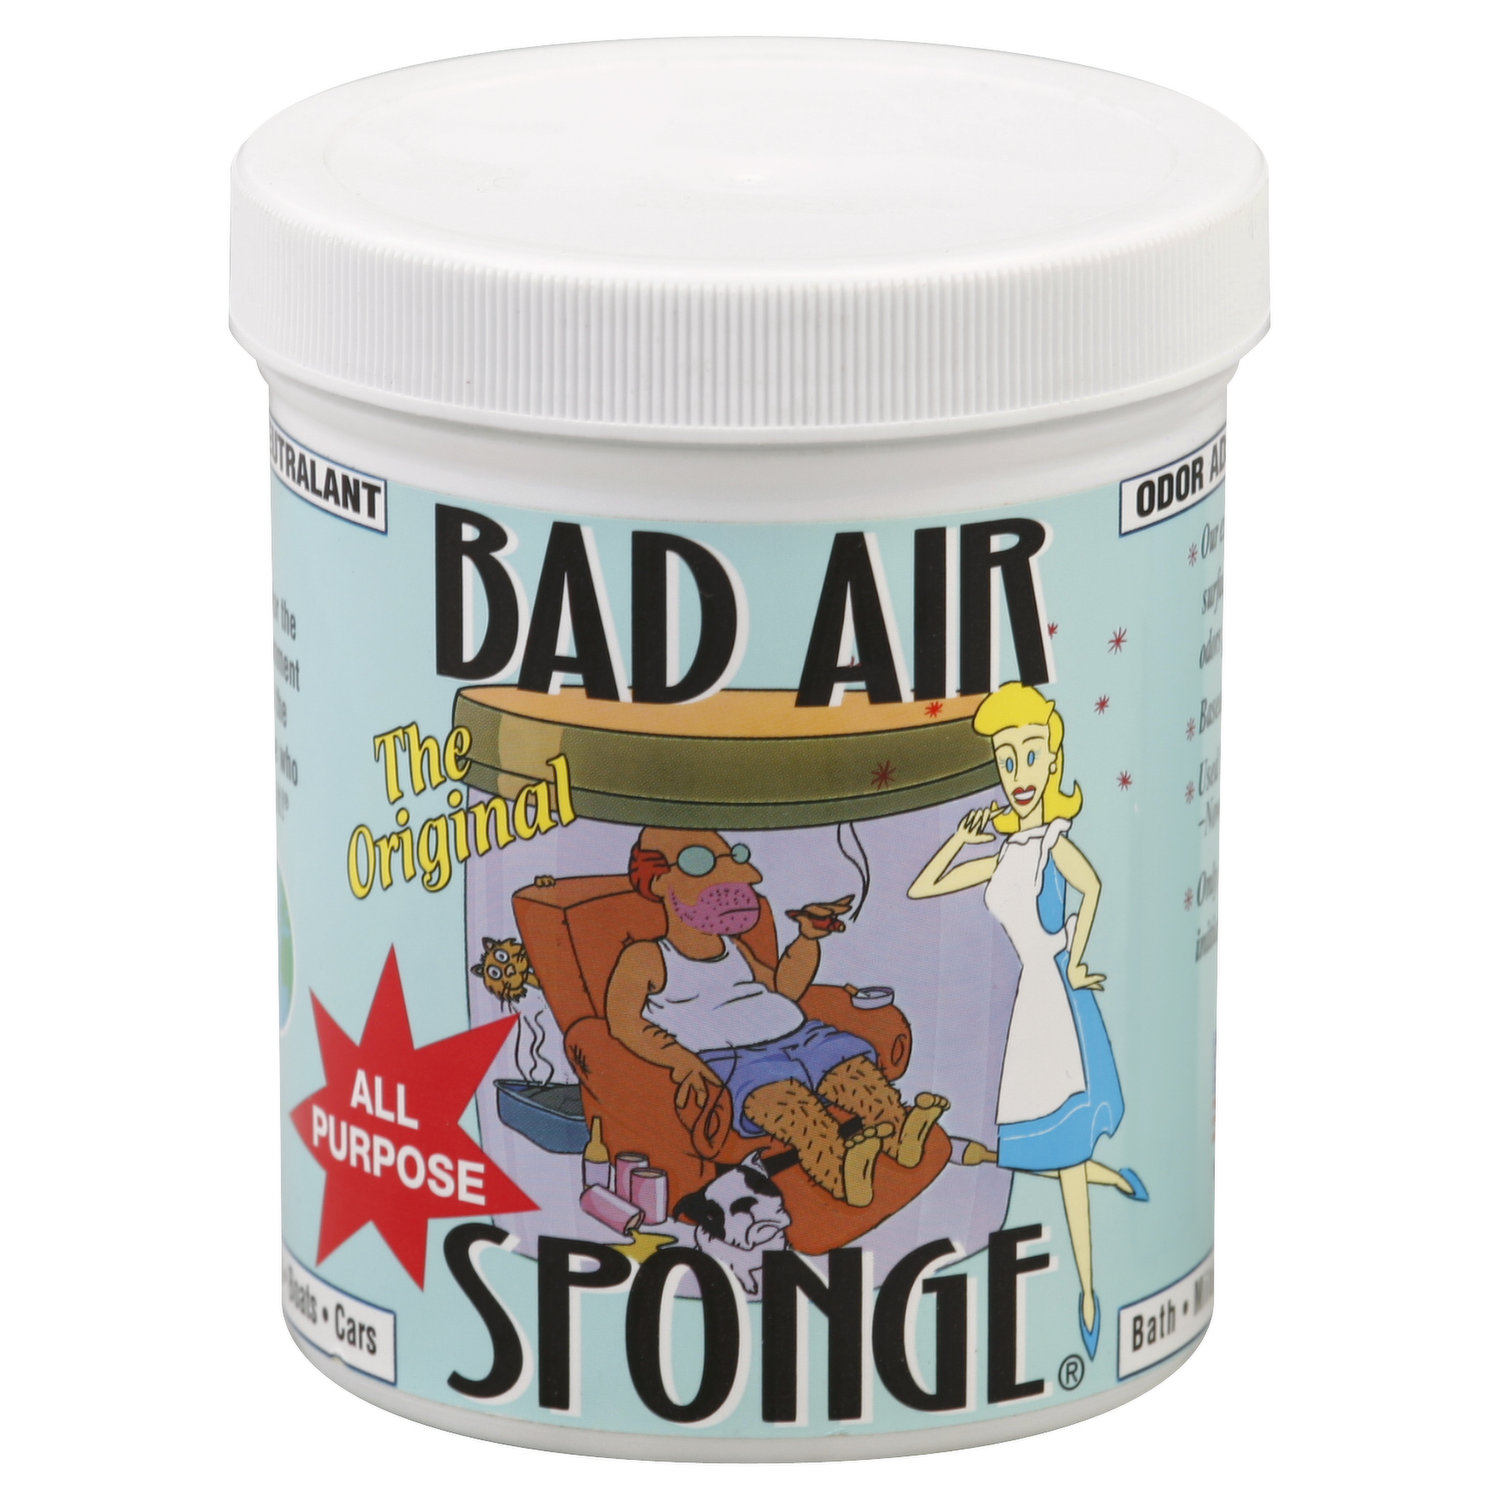 Bad Air Sponge 2lb. Container (3002N), Blue